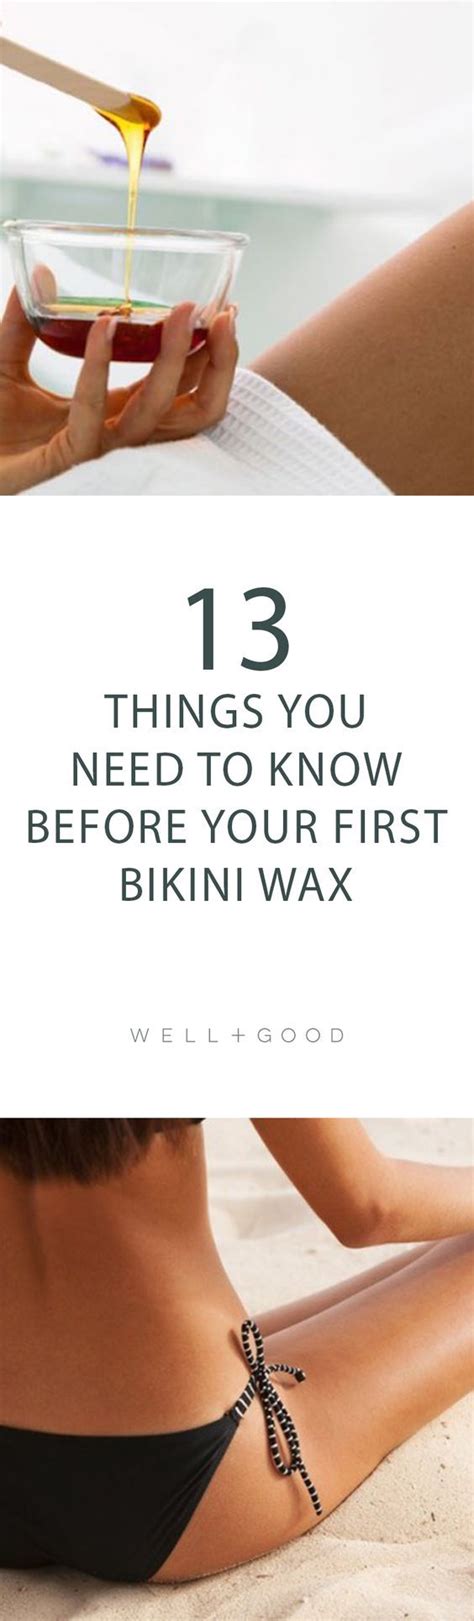 How To Prep For A Bikini Wax Well Good Bikini Wax Bikini Line Wax